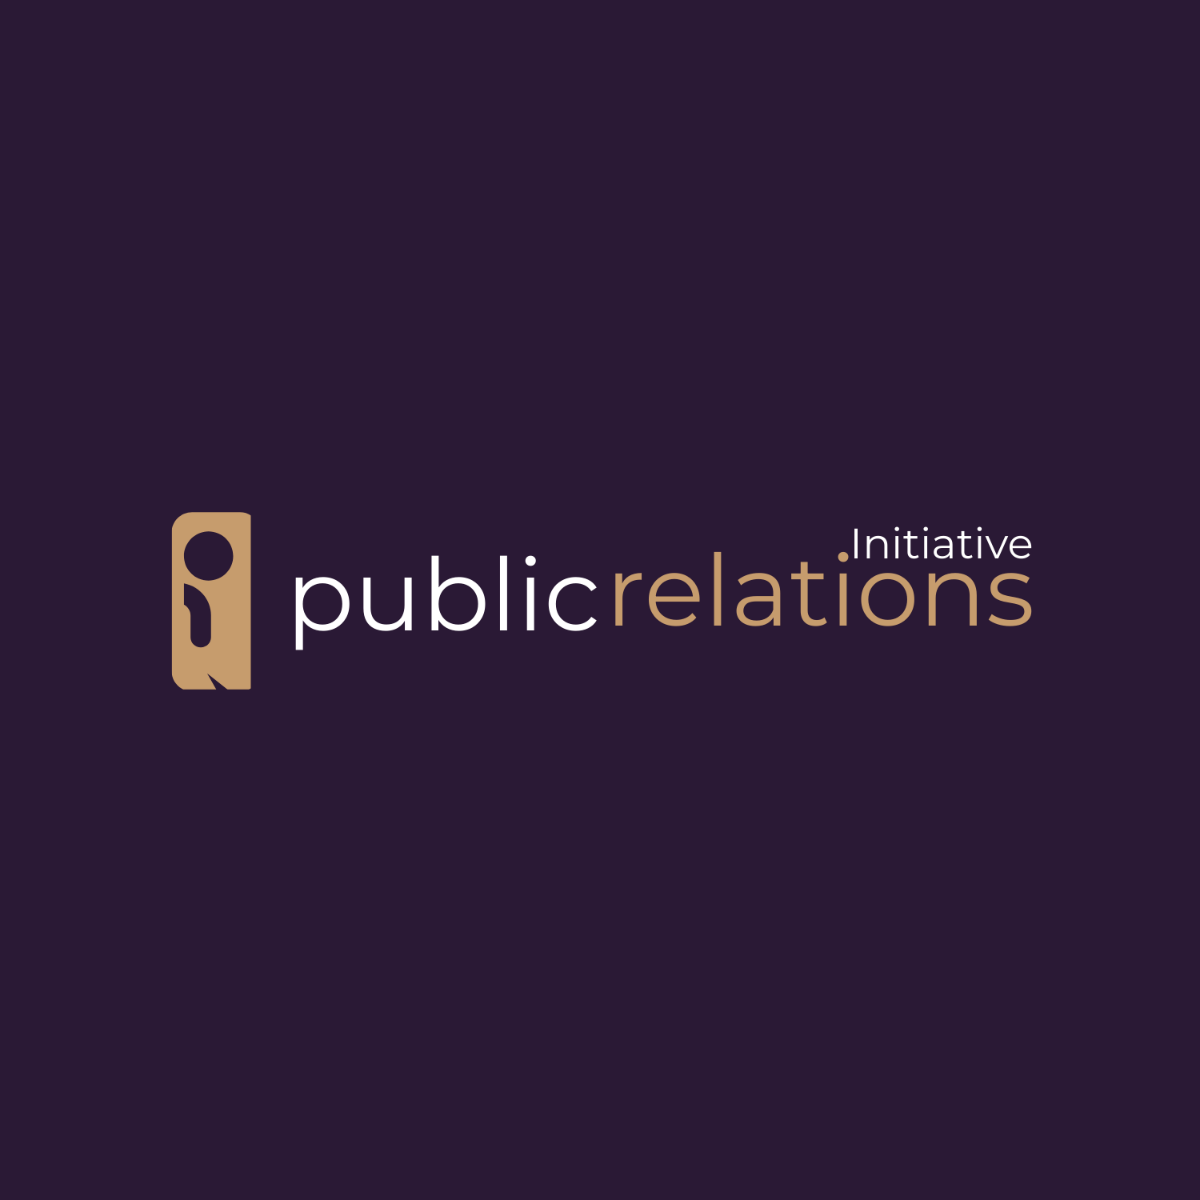 Public Relations Initiative Logo Template